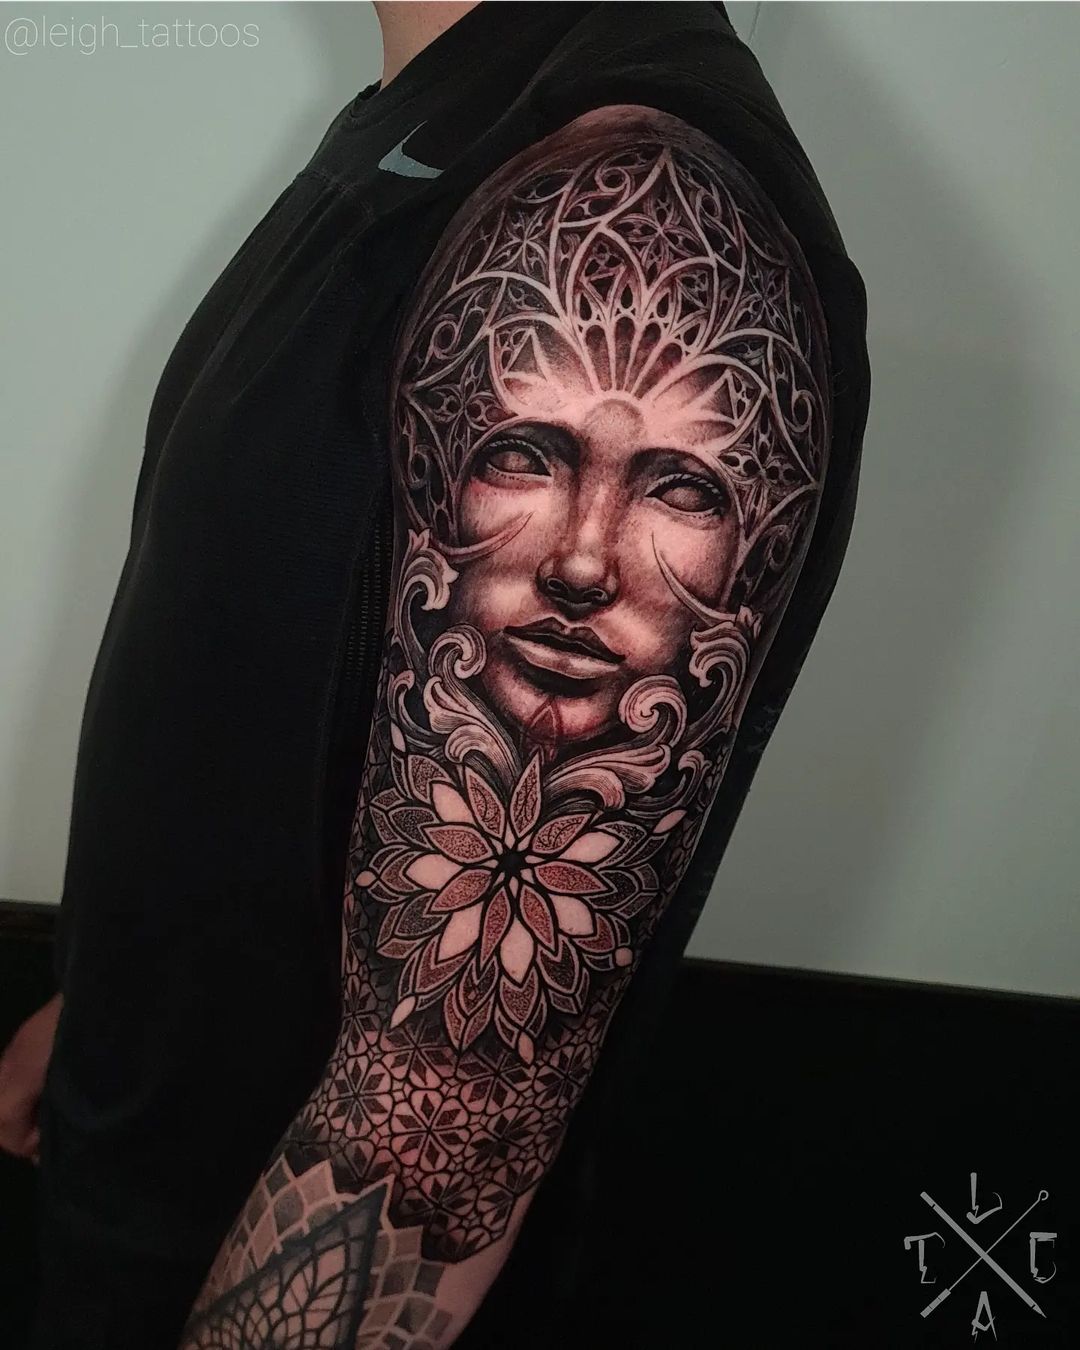 Unique blackwork tattoo design by leigh tattoos